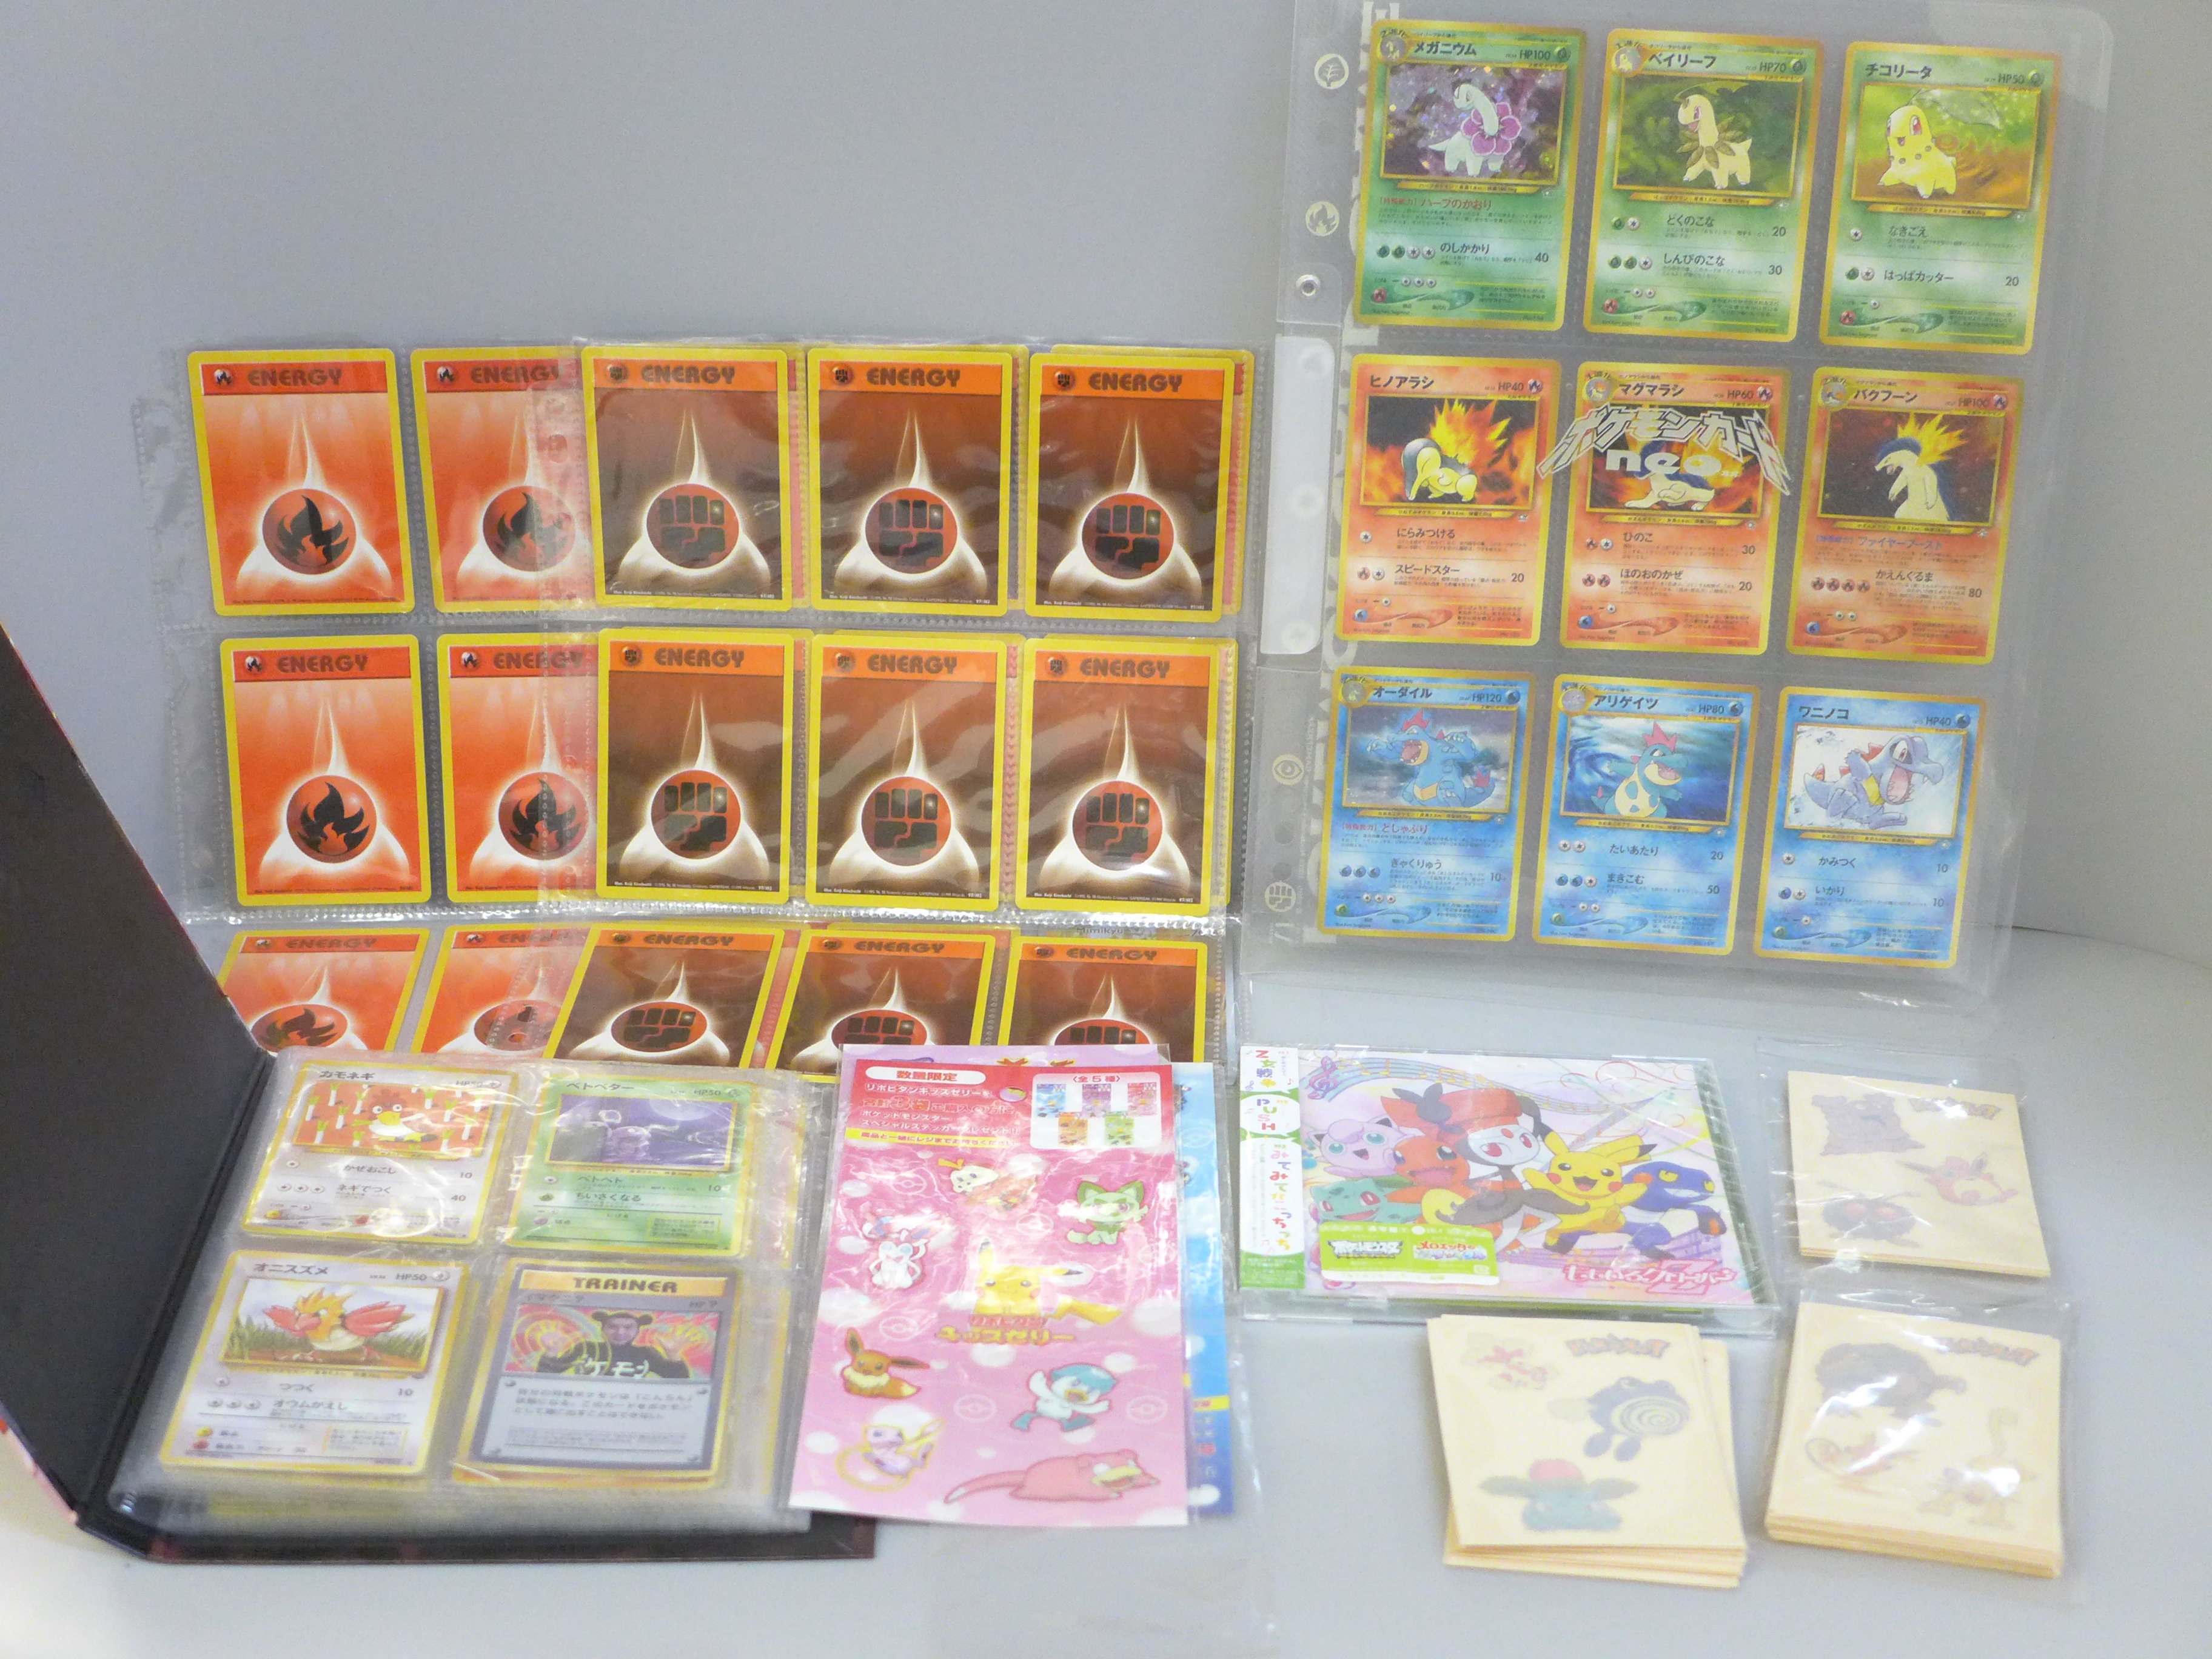 Japanese Pokemon base cards, Neo cards and Energy cards, etc.